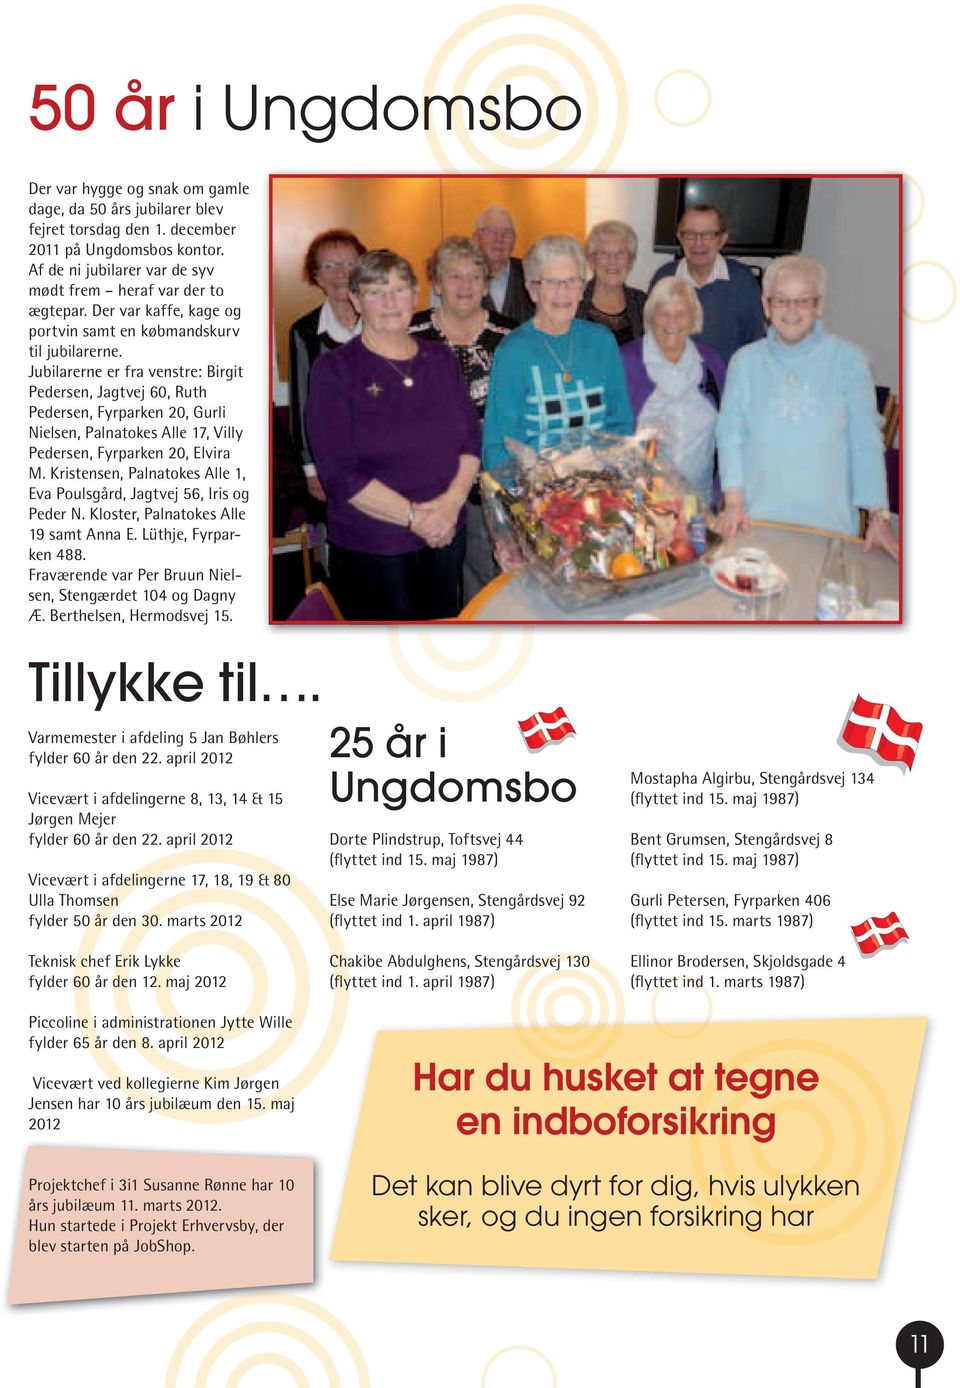 Jubilarerne er fra venstre: Birgit Pedersen, Jagtvej 60, Ruth Pedersen, Fyrparken 20, Gurli Nielsen, Palnatokes Alle 17, Villy Pedersen, Fyrparken 20, Elvira M.